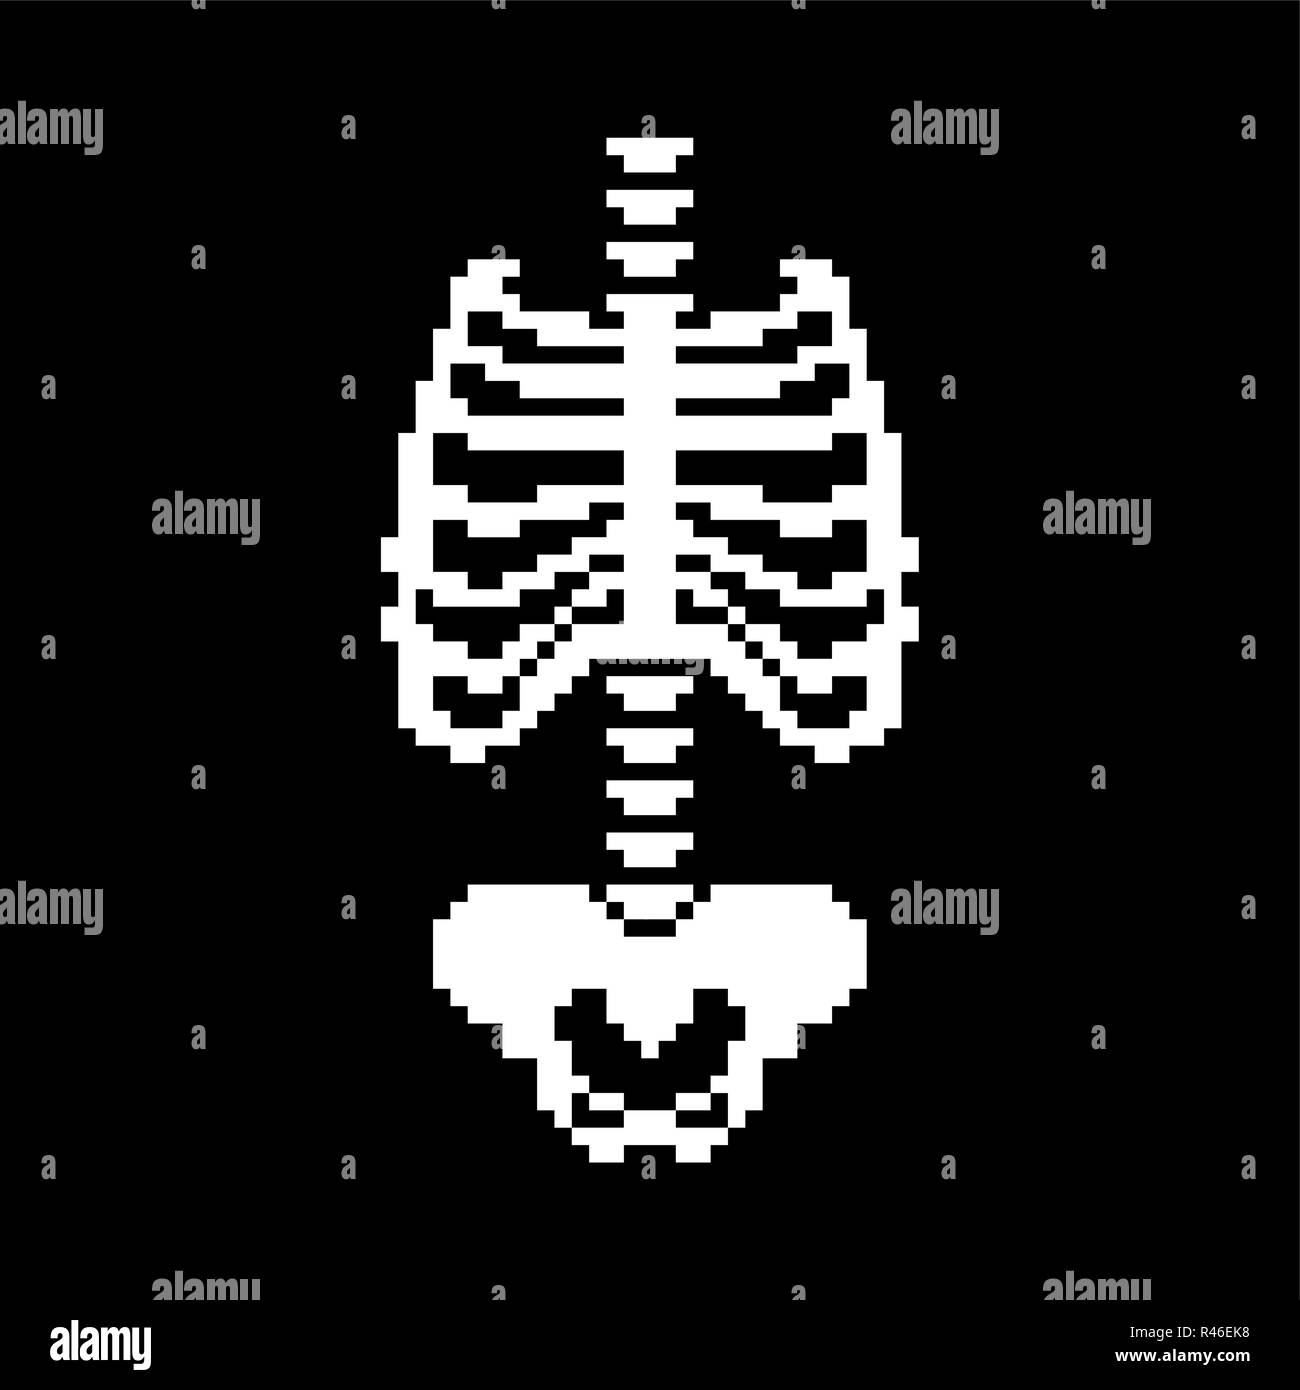 Rib cage and Spinal, Pelvic bone pixel art. Bones anatomy 8 bit. Pixelate Human Skeleton system 16bit. Old game computer graphics style Stock Vector